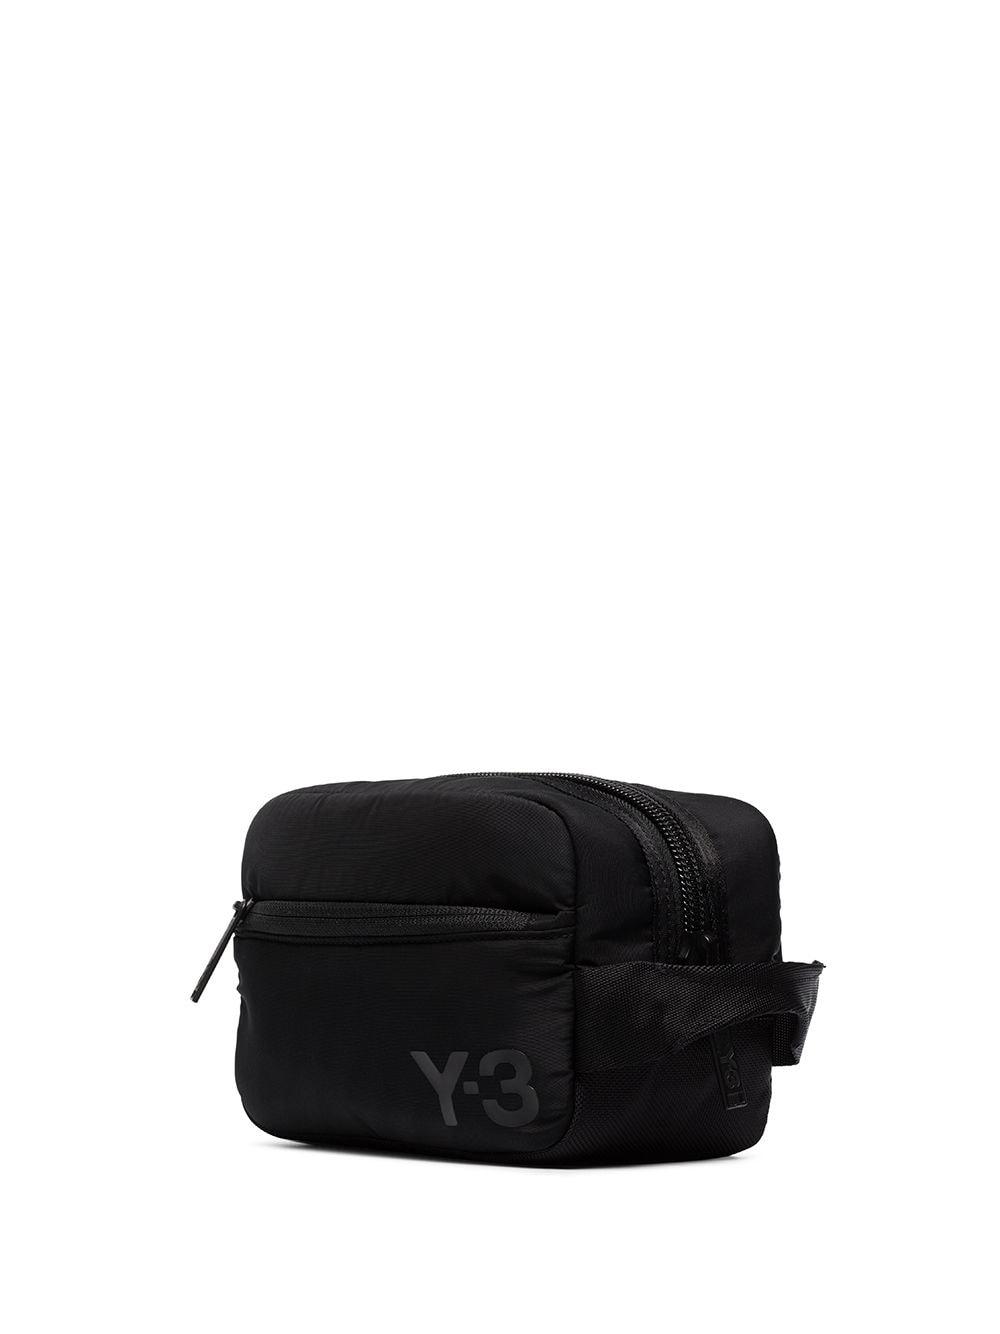 Y-3 Tech Sling Bag in Black for Men Mens Bags Toiletry bags and wash bags 